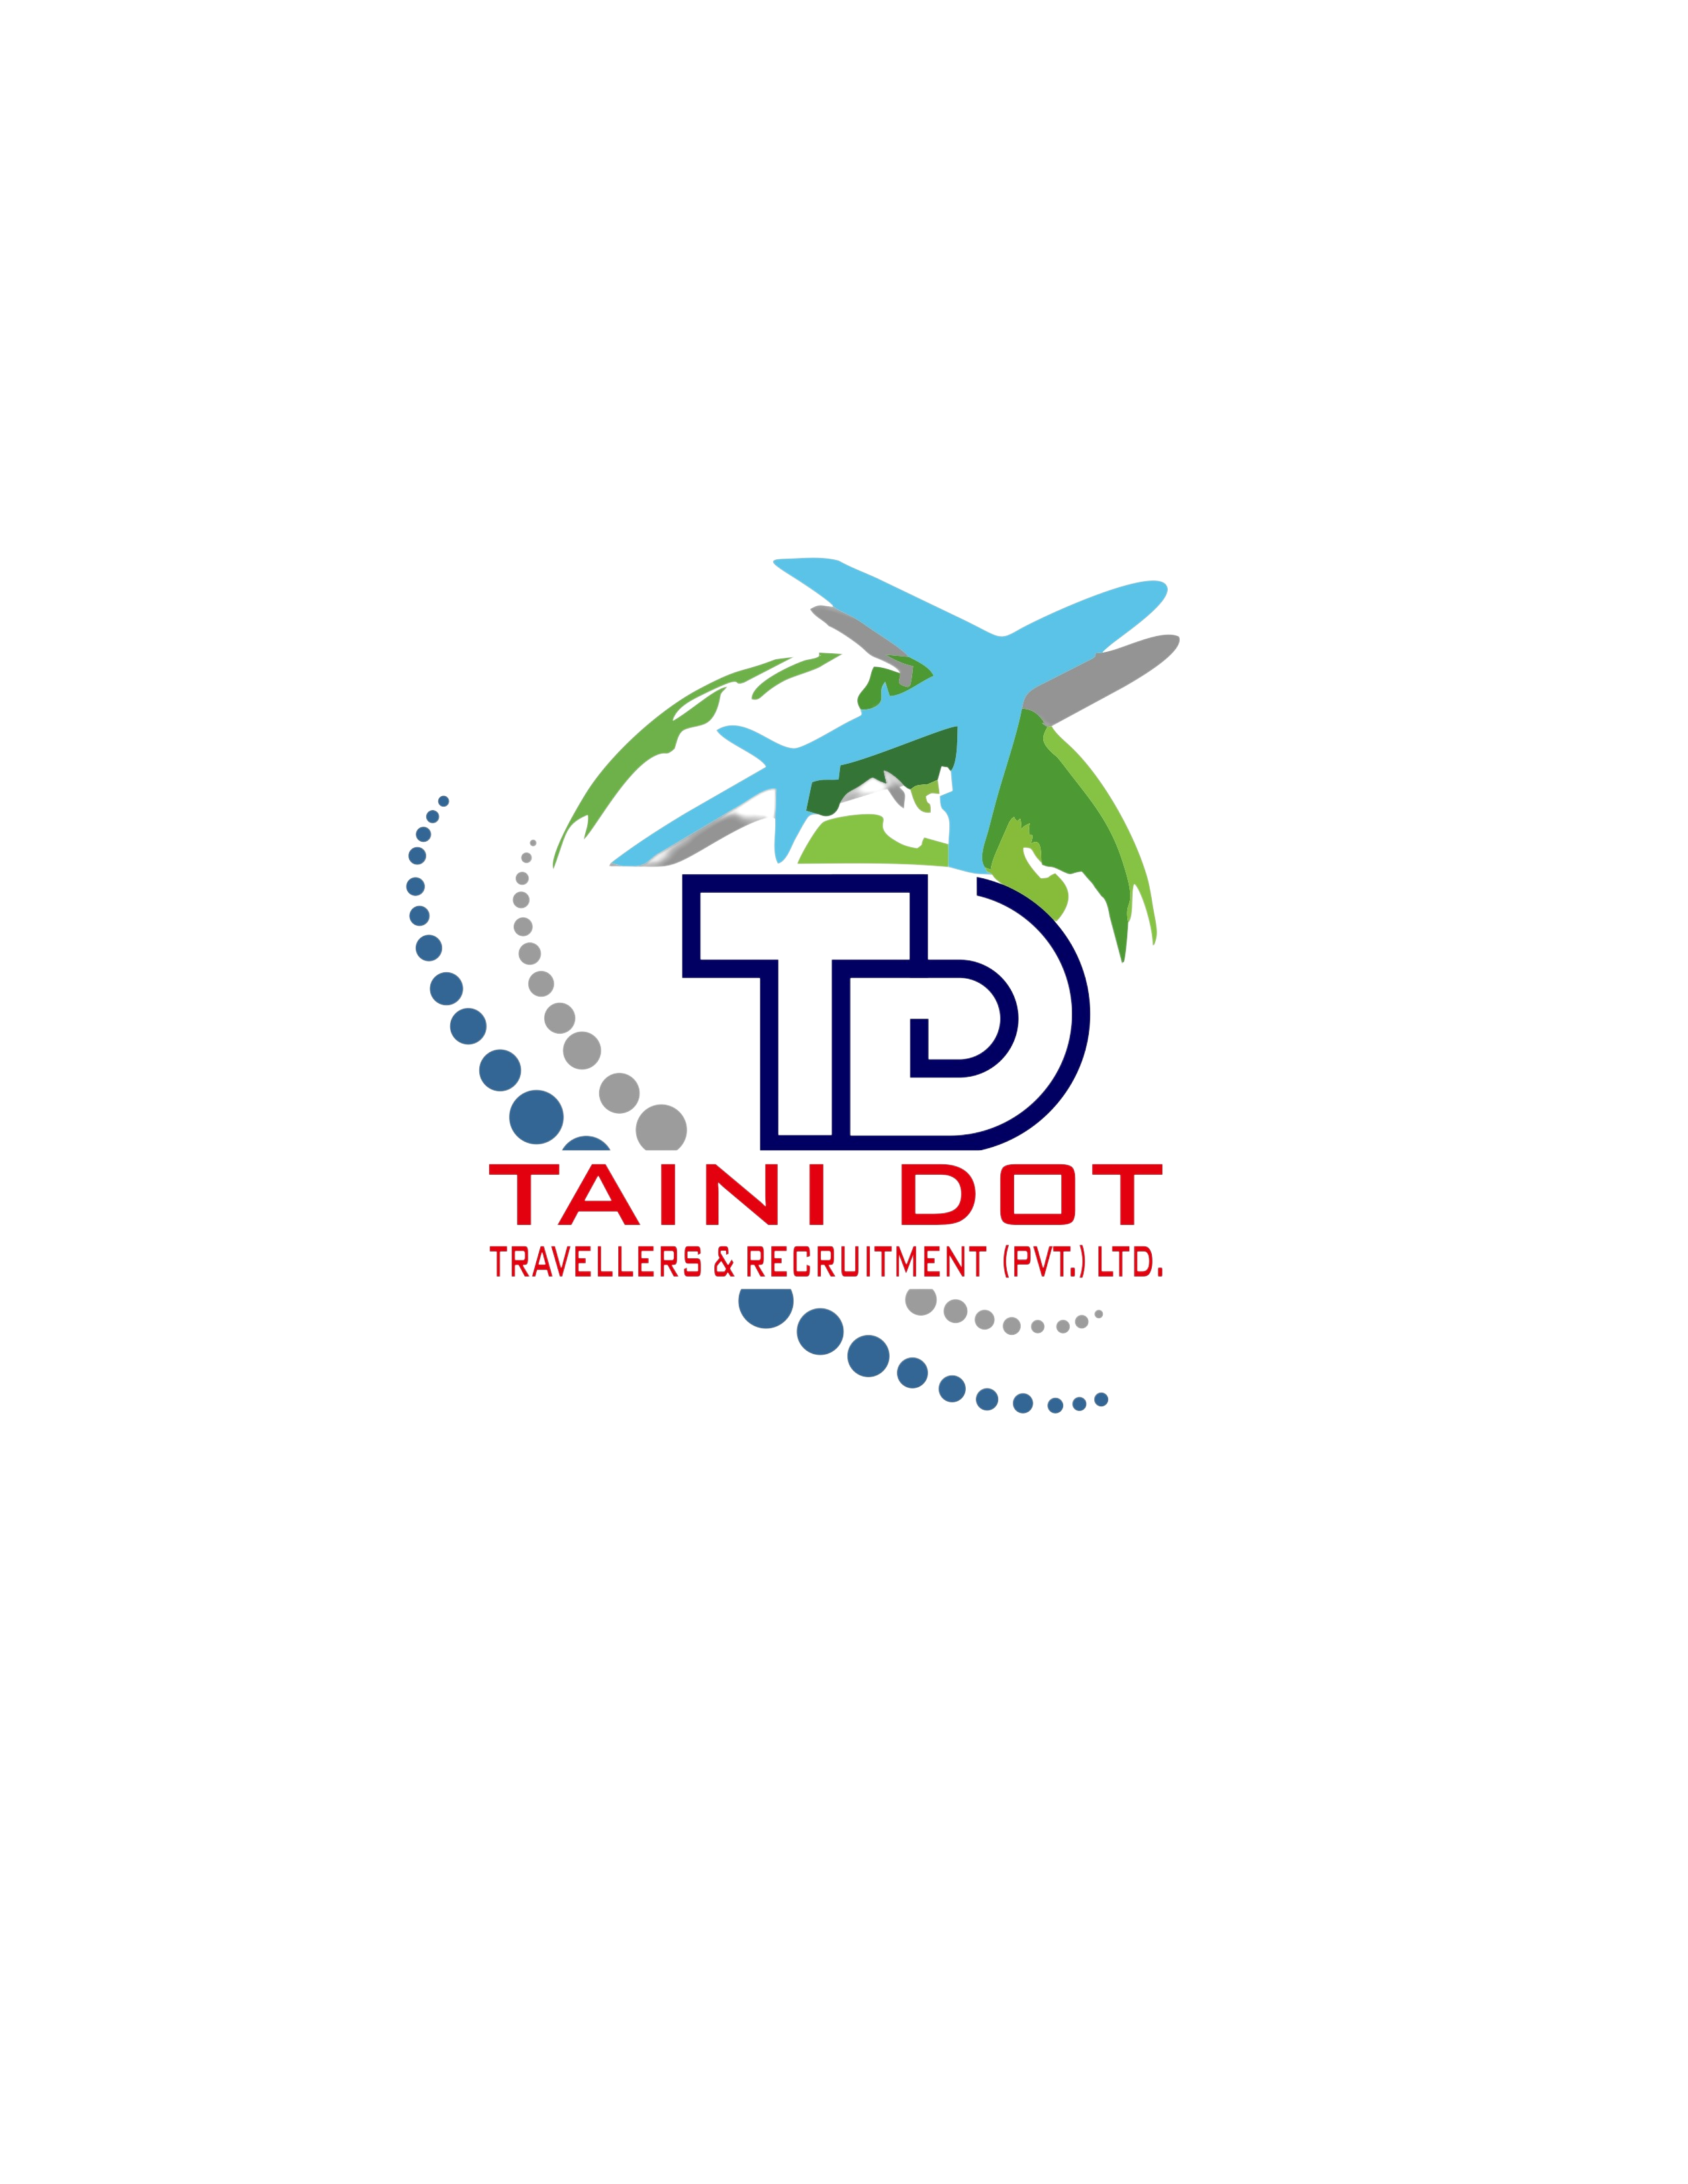 Taini Dot - Travellers & Recruitment (PVT.)LTD.